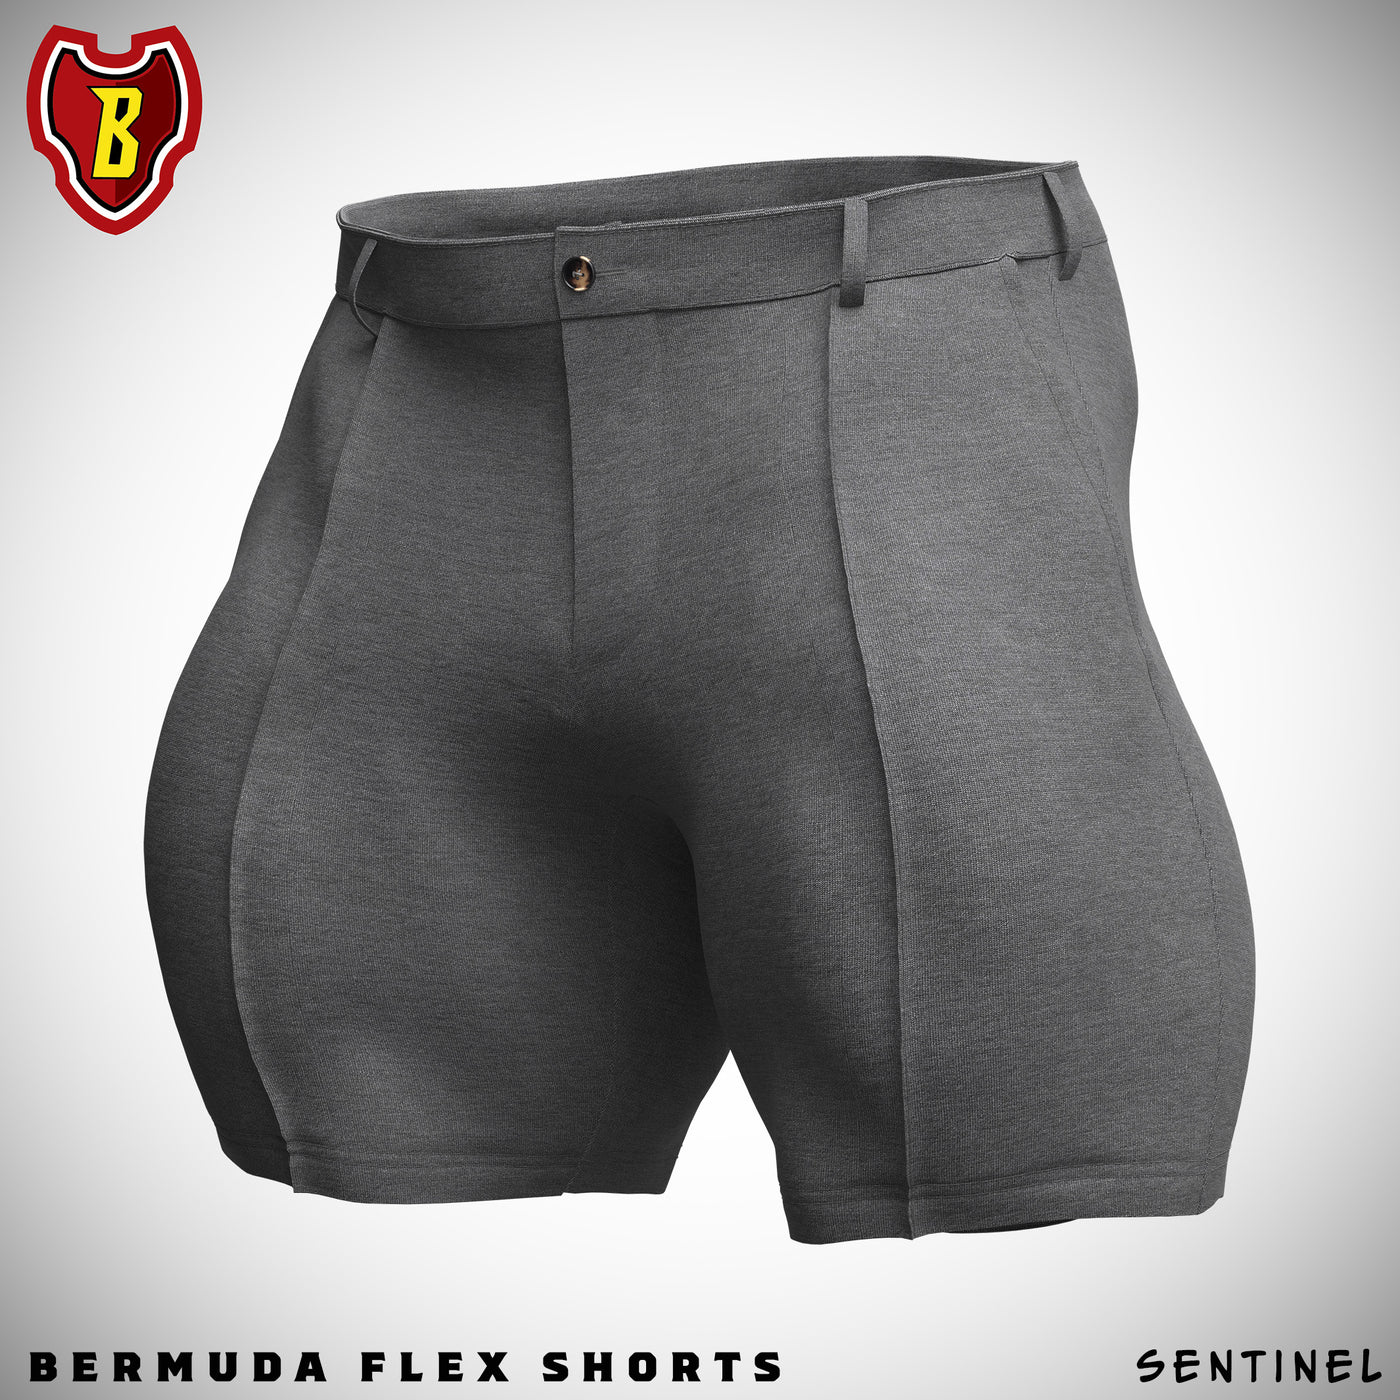 Bermuda Flex Shorts